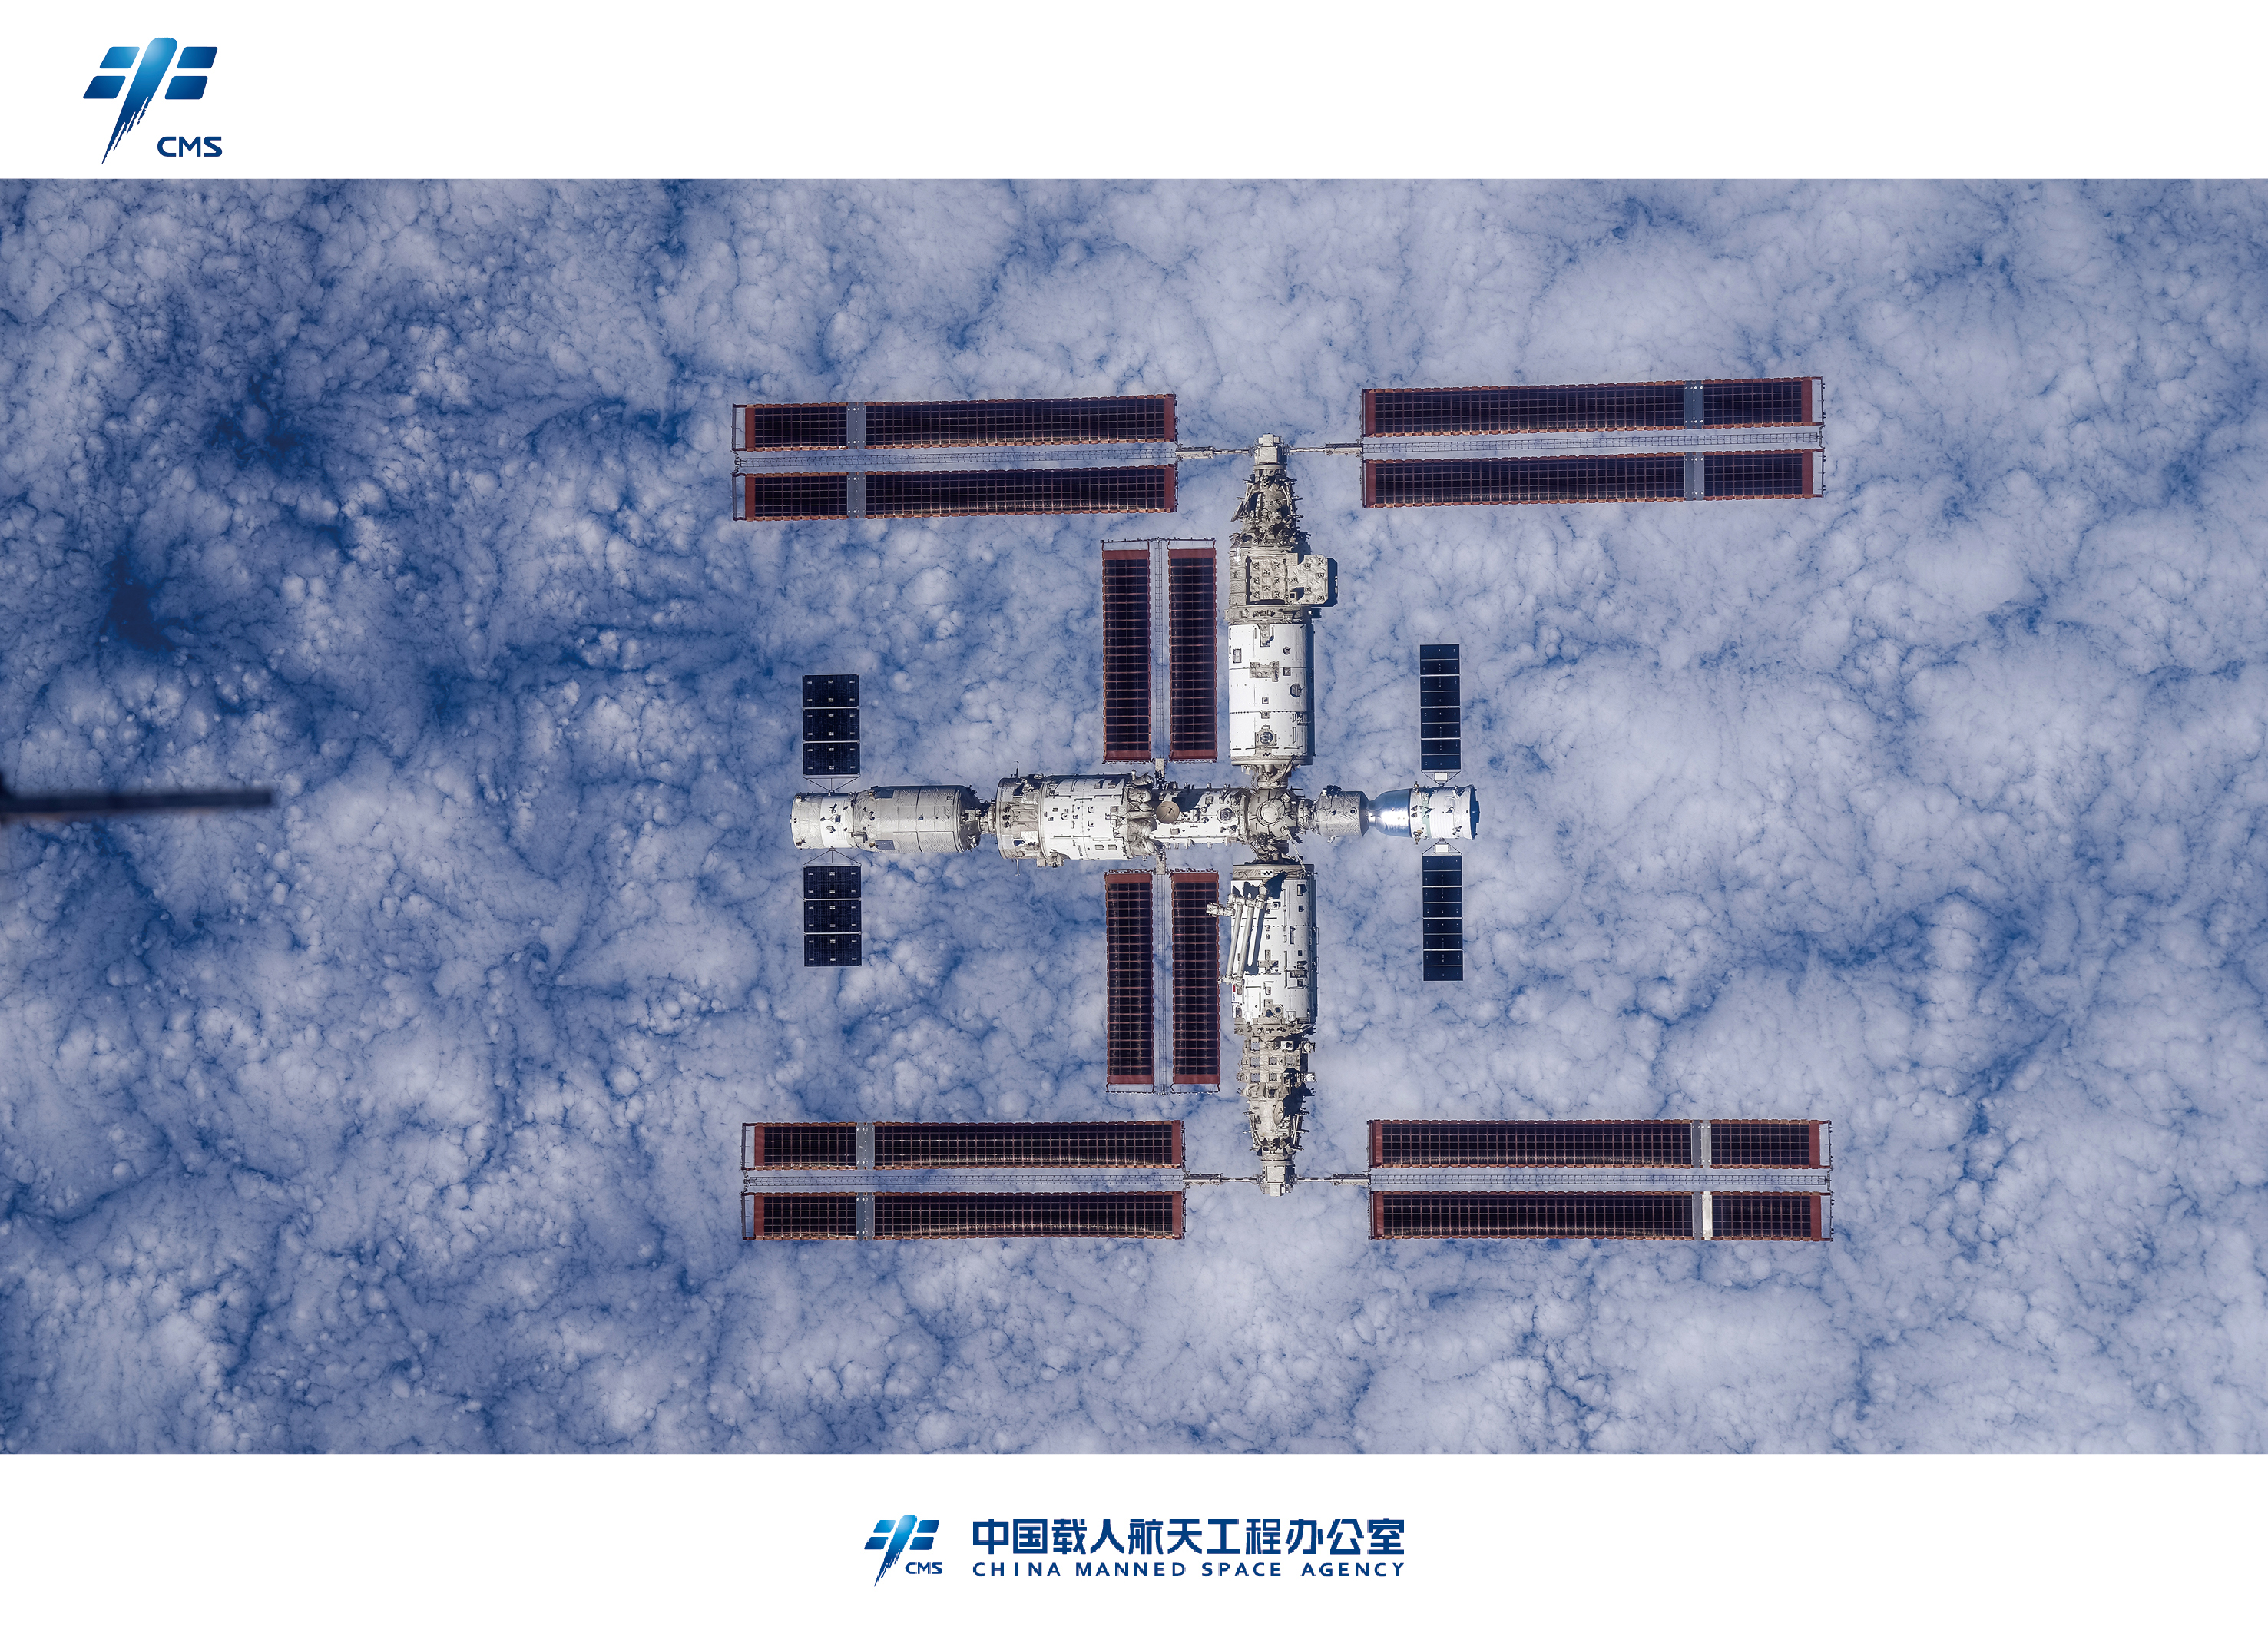 China Rilis Gambar Stasiun Ruang Angkasa Resolusi Tinggi-Image-1